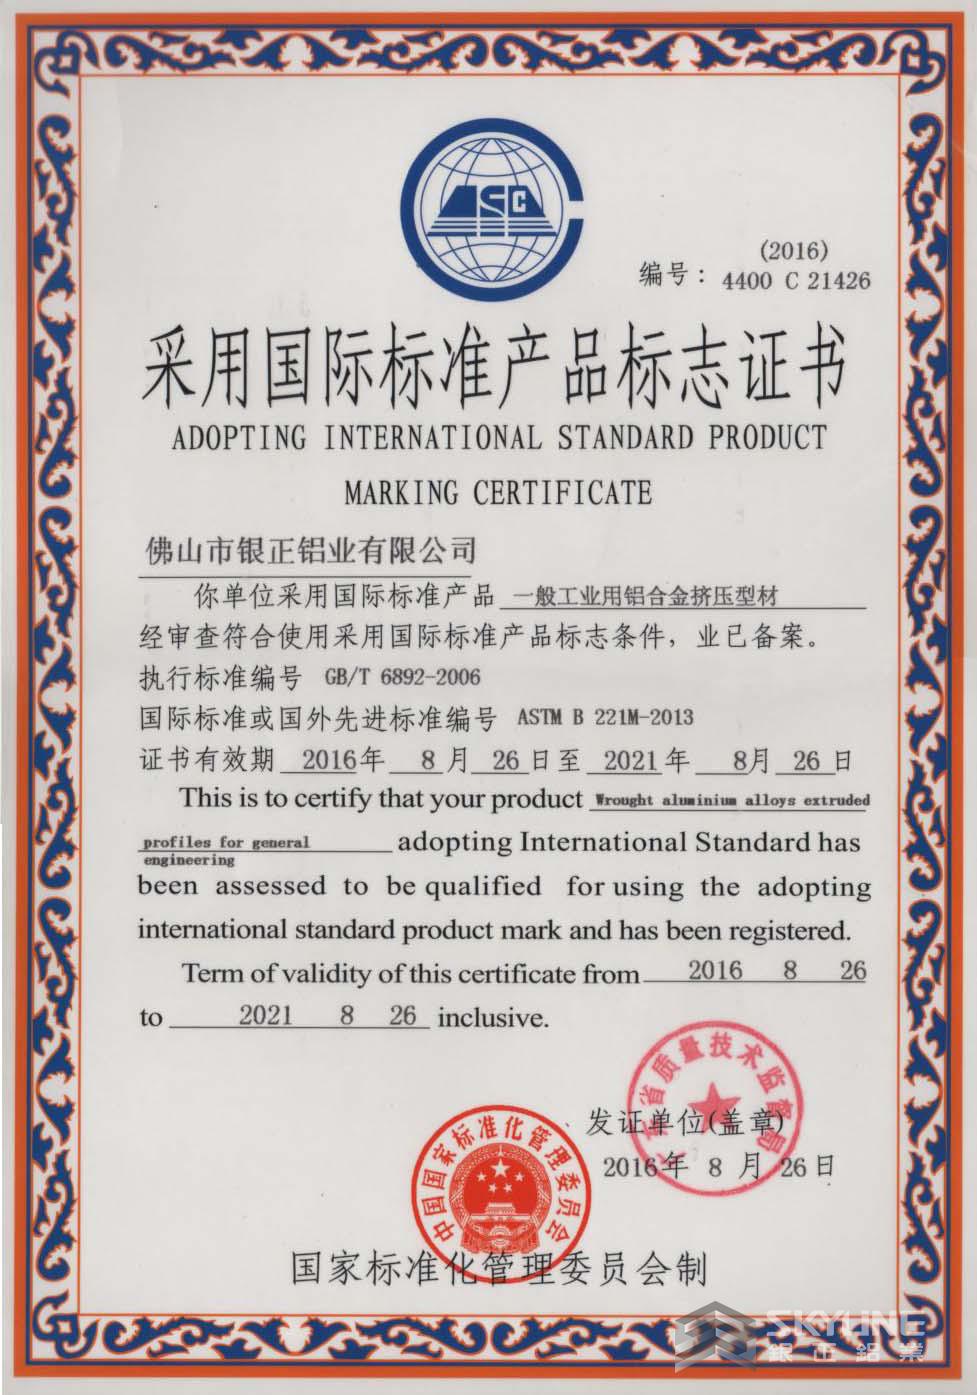 International Standard Product Mark Certificate